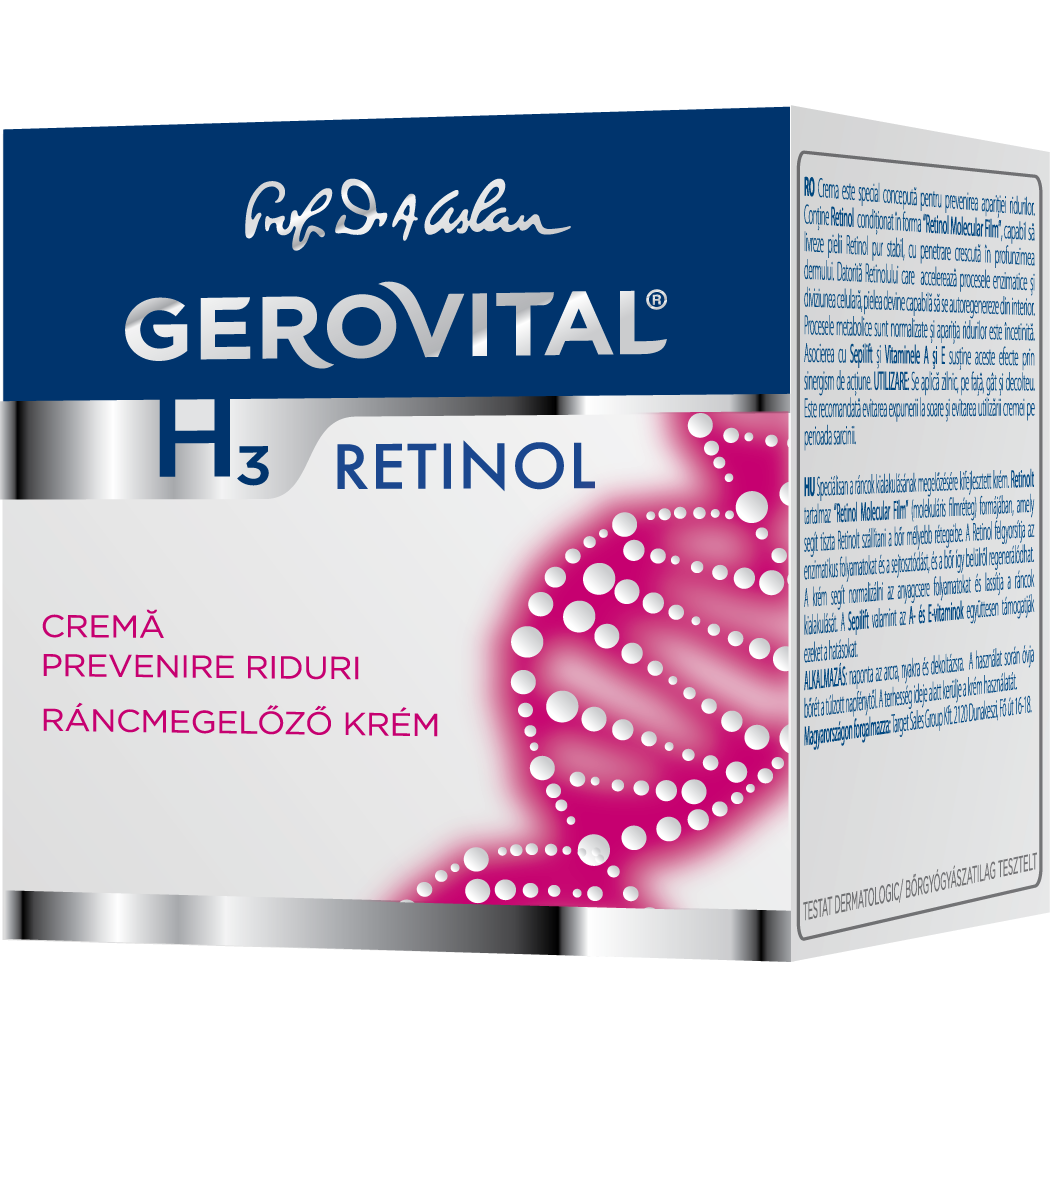 GEROVITAL H3 RETINOL CREMA PREVENIRE RIDURI